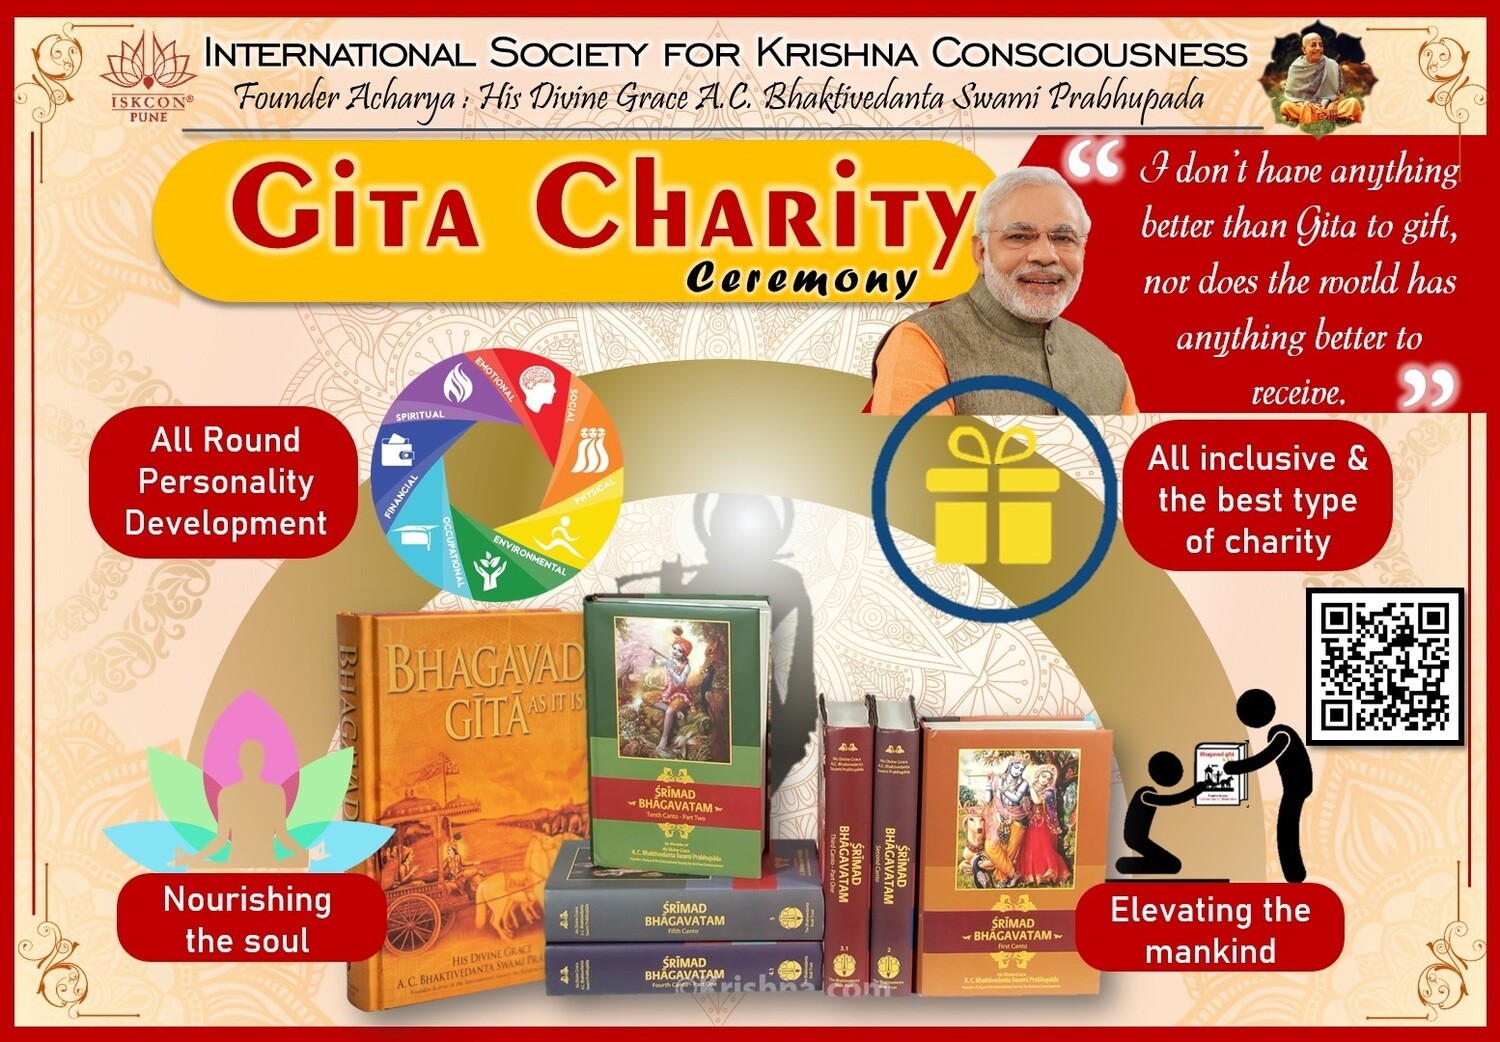 "Gita Charity Ceremony" Event Booking